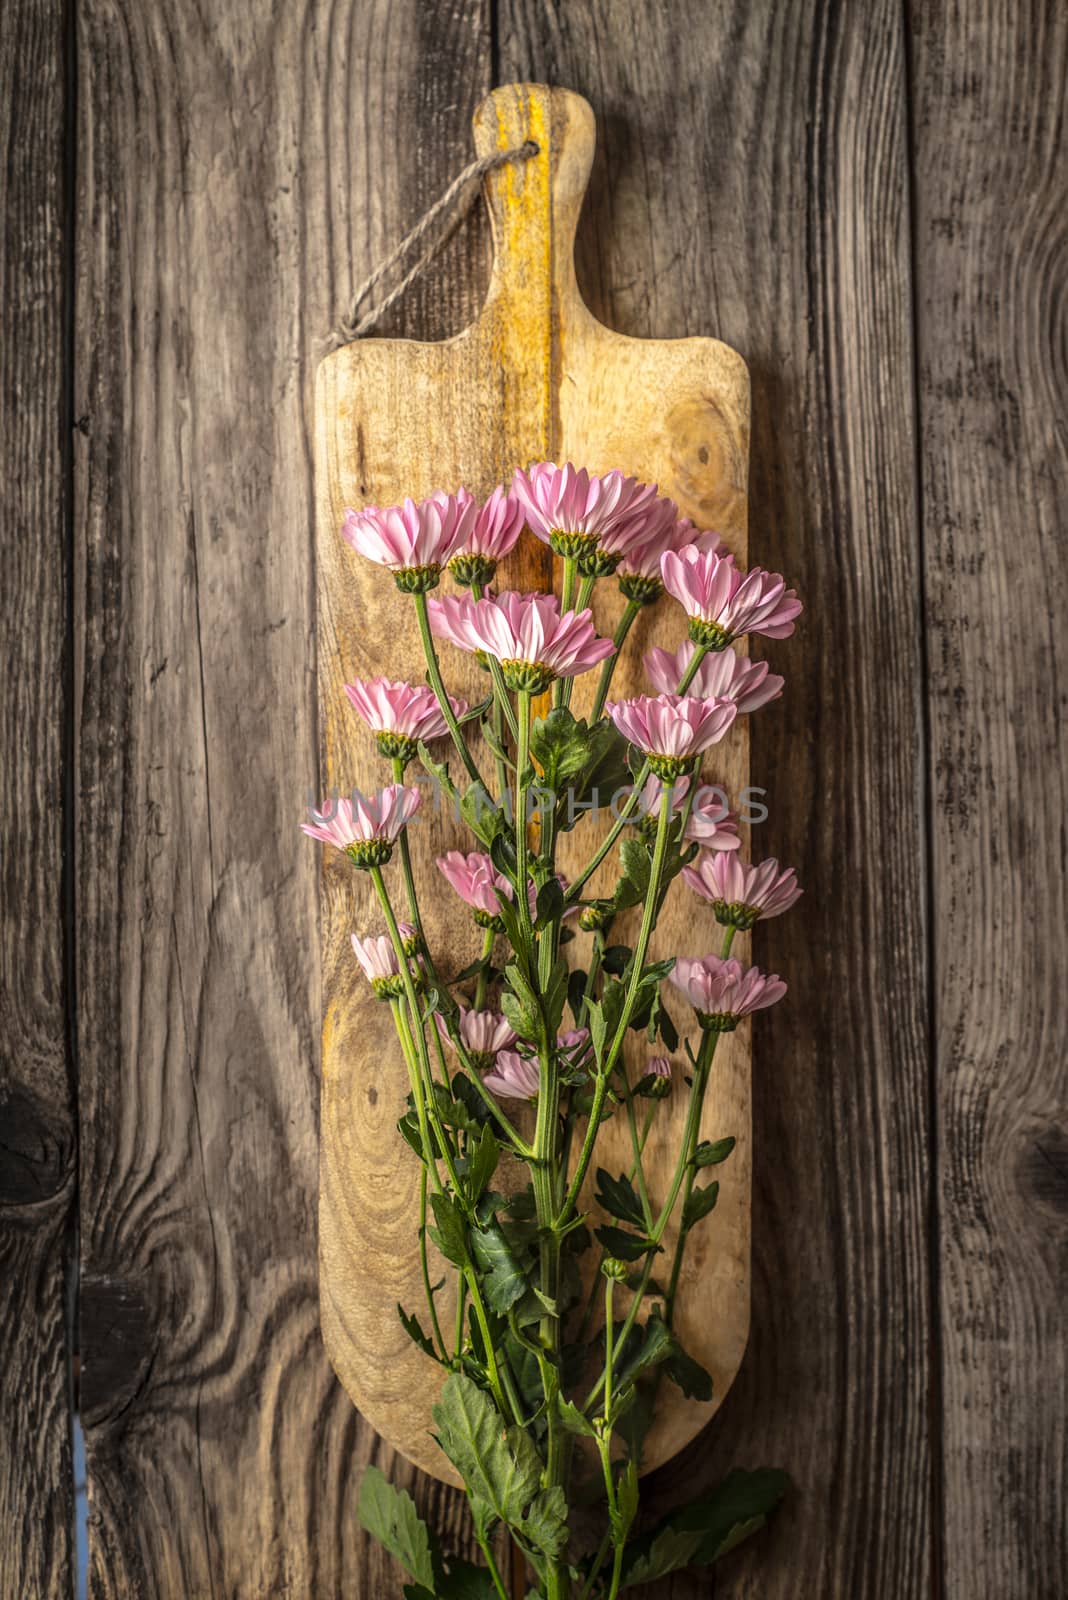 Pink flowers on the wooden board vertical by Deniskarpenkov